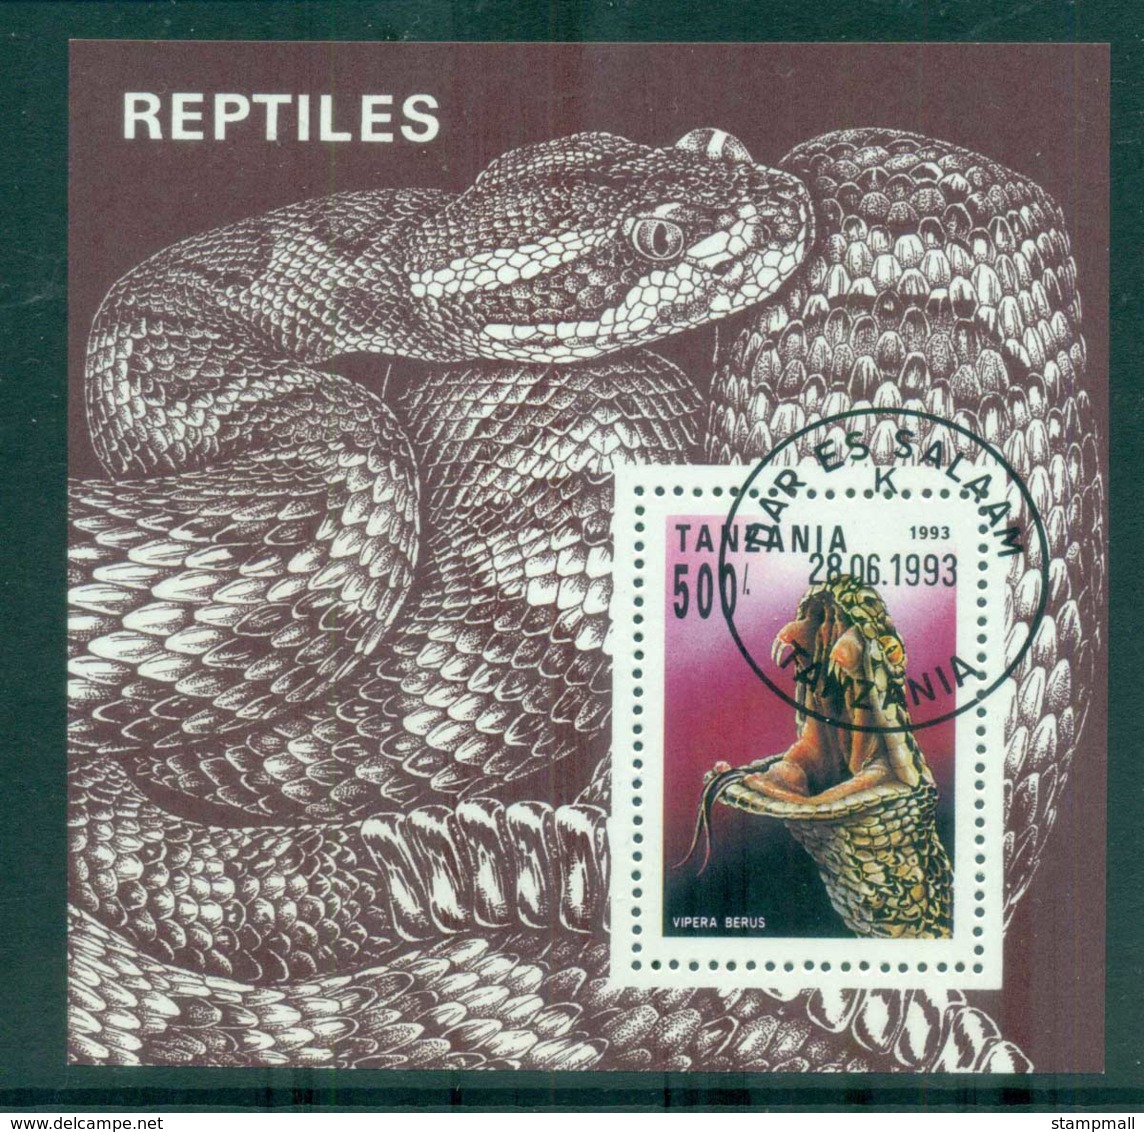 Tanzania 1993 Reptiles MS CTO Lot84812 - Swaziland (1968-...)